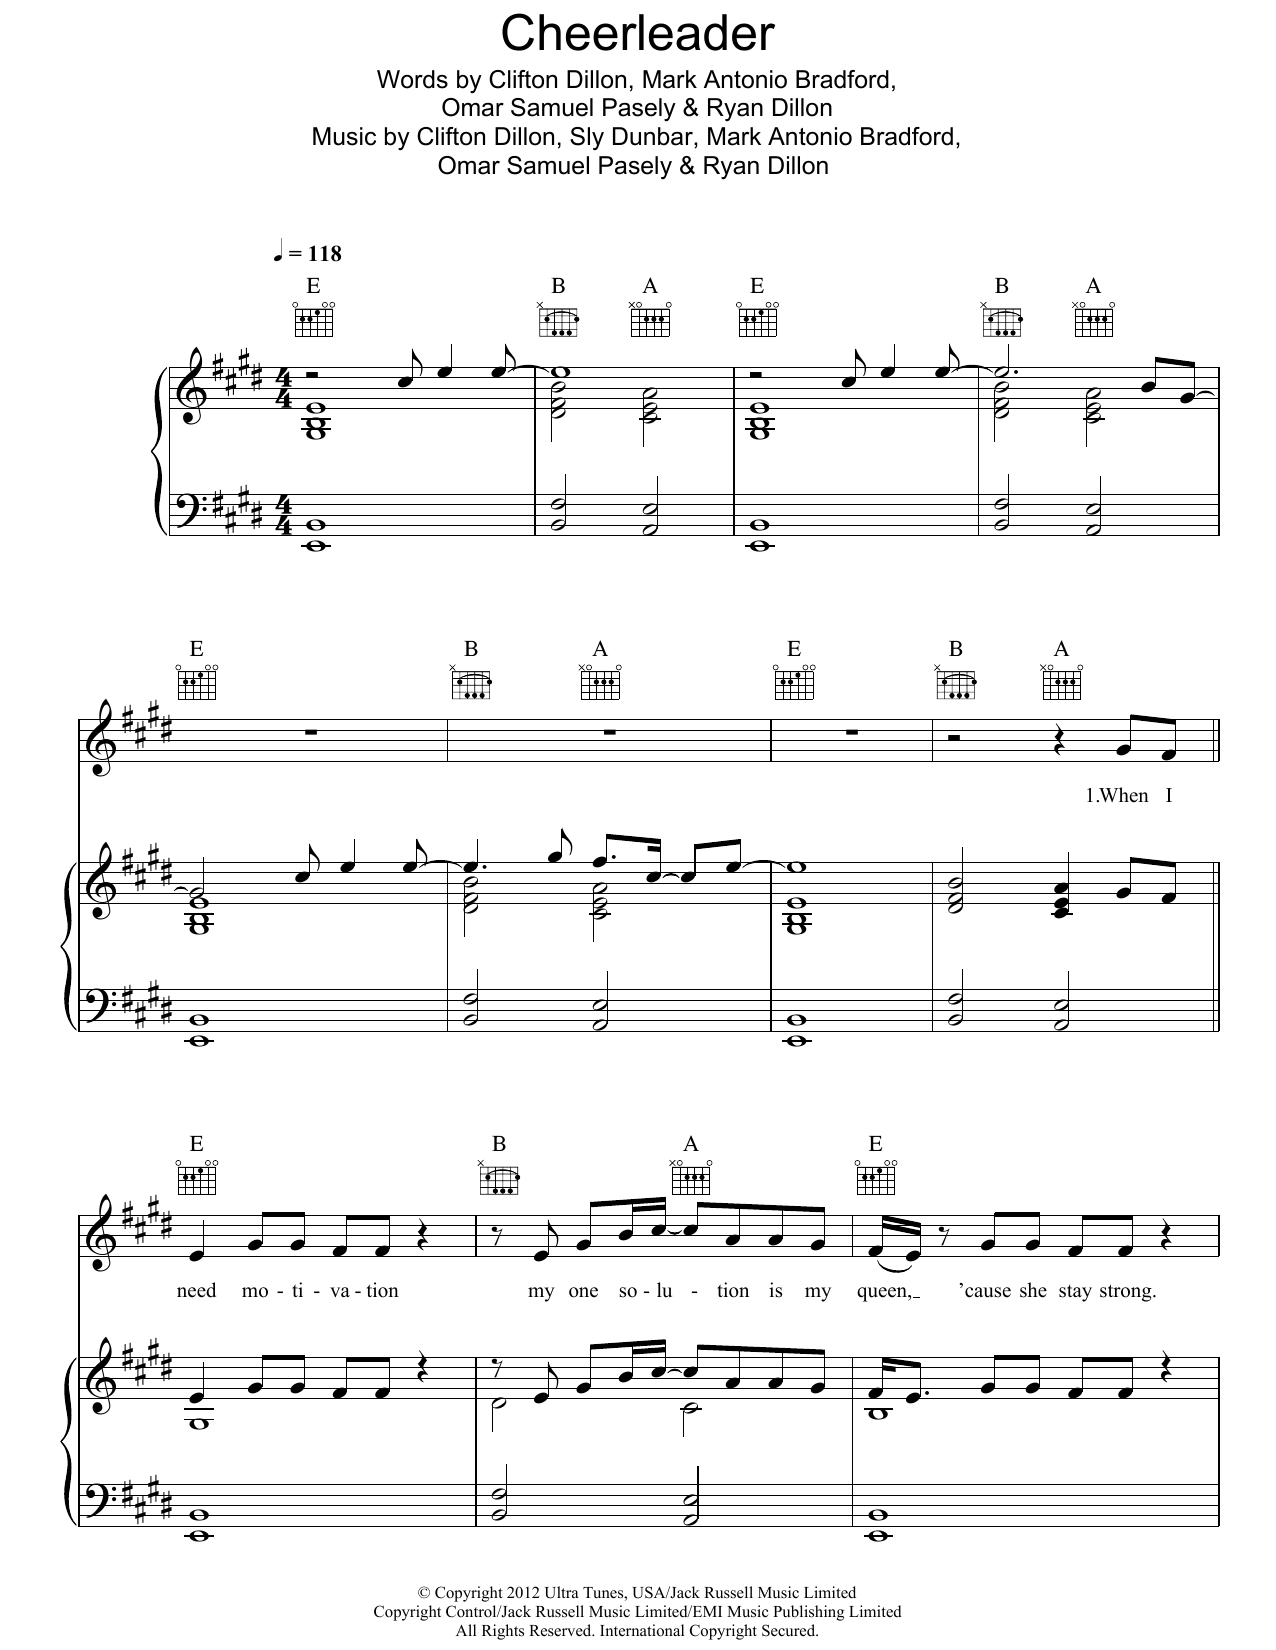 Omi Cheerleader Sheet Music Notes & Chords for Guitar Chords/Lyrics - Download or Print PDF